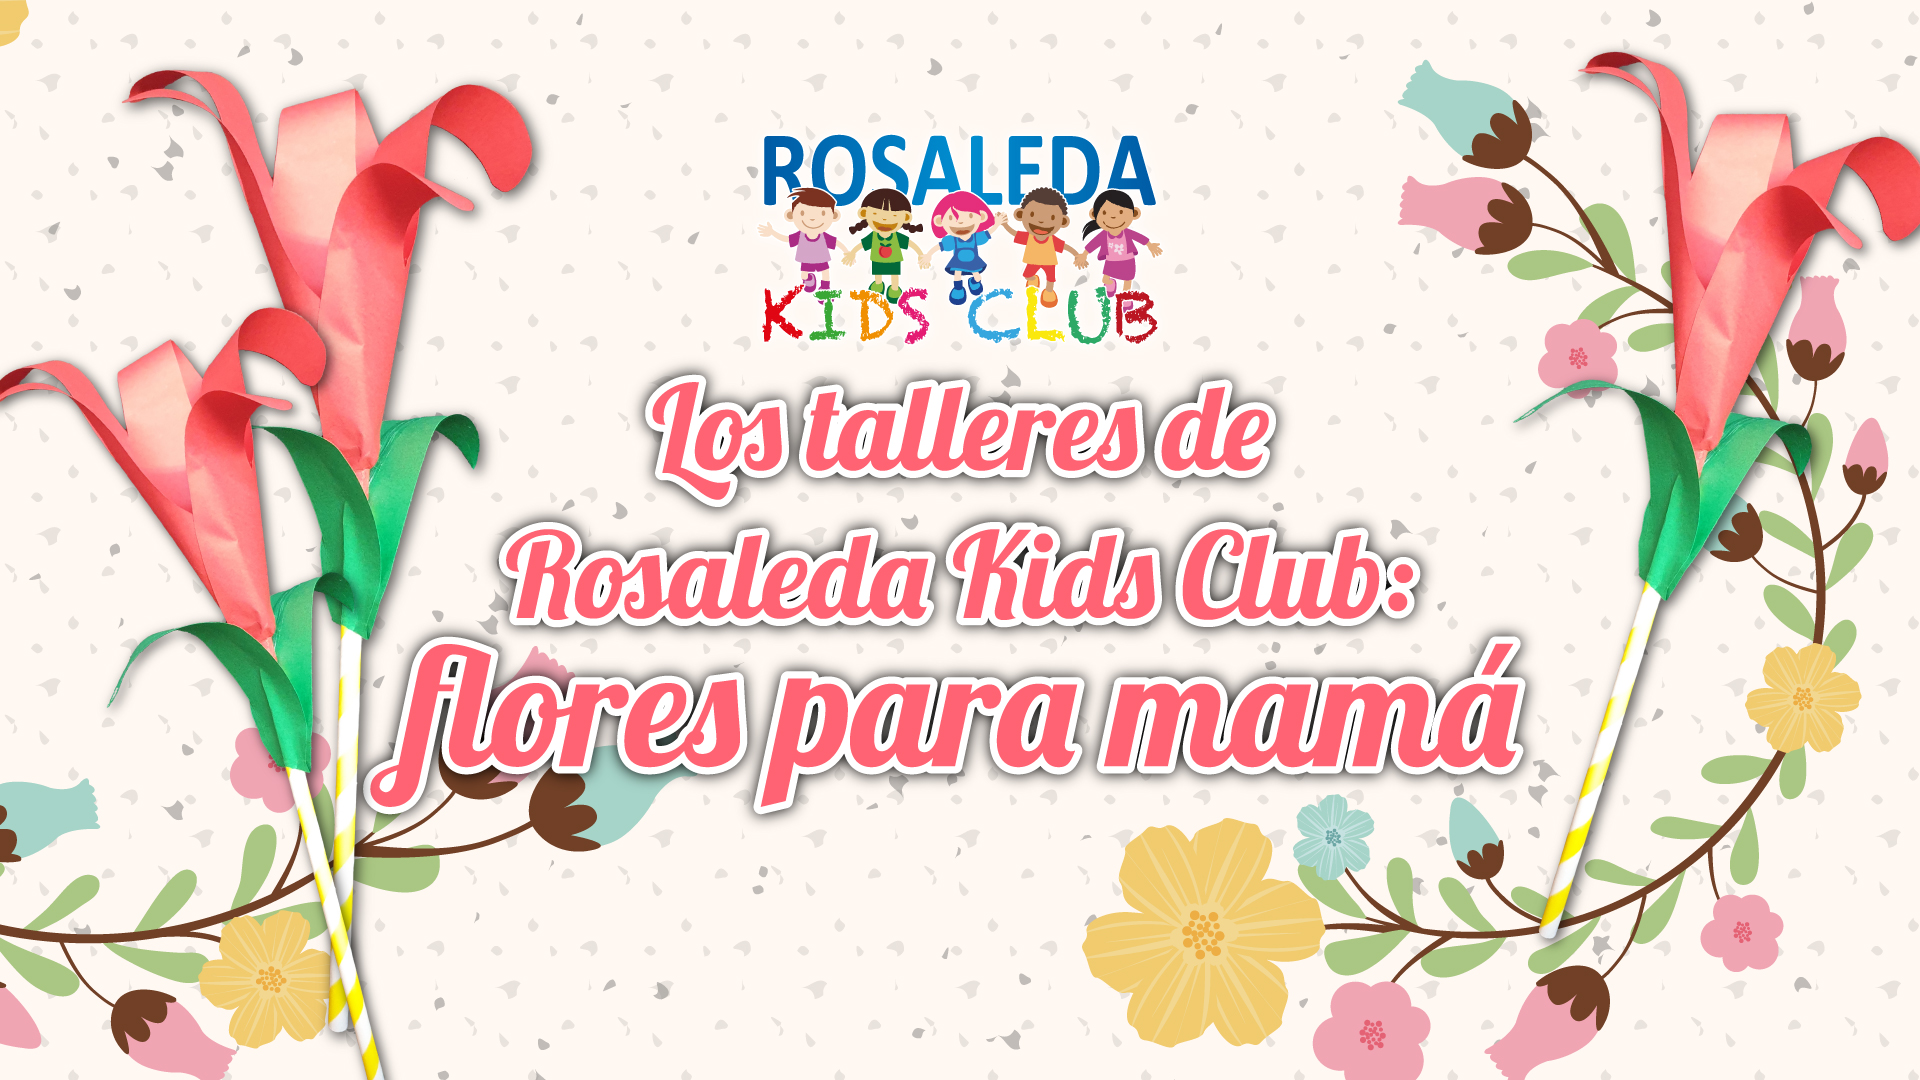 Rosaleda Kids Club: flores para mamá